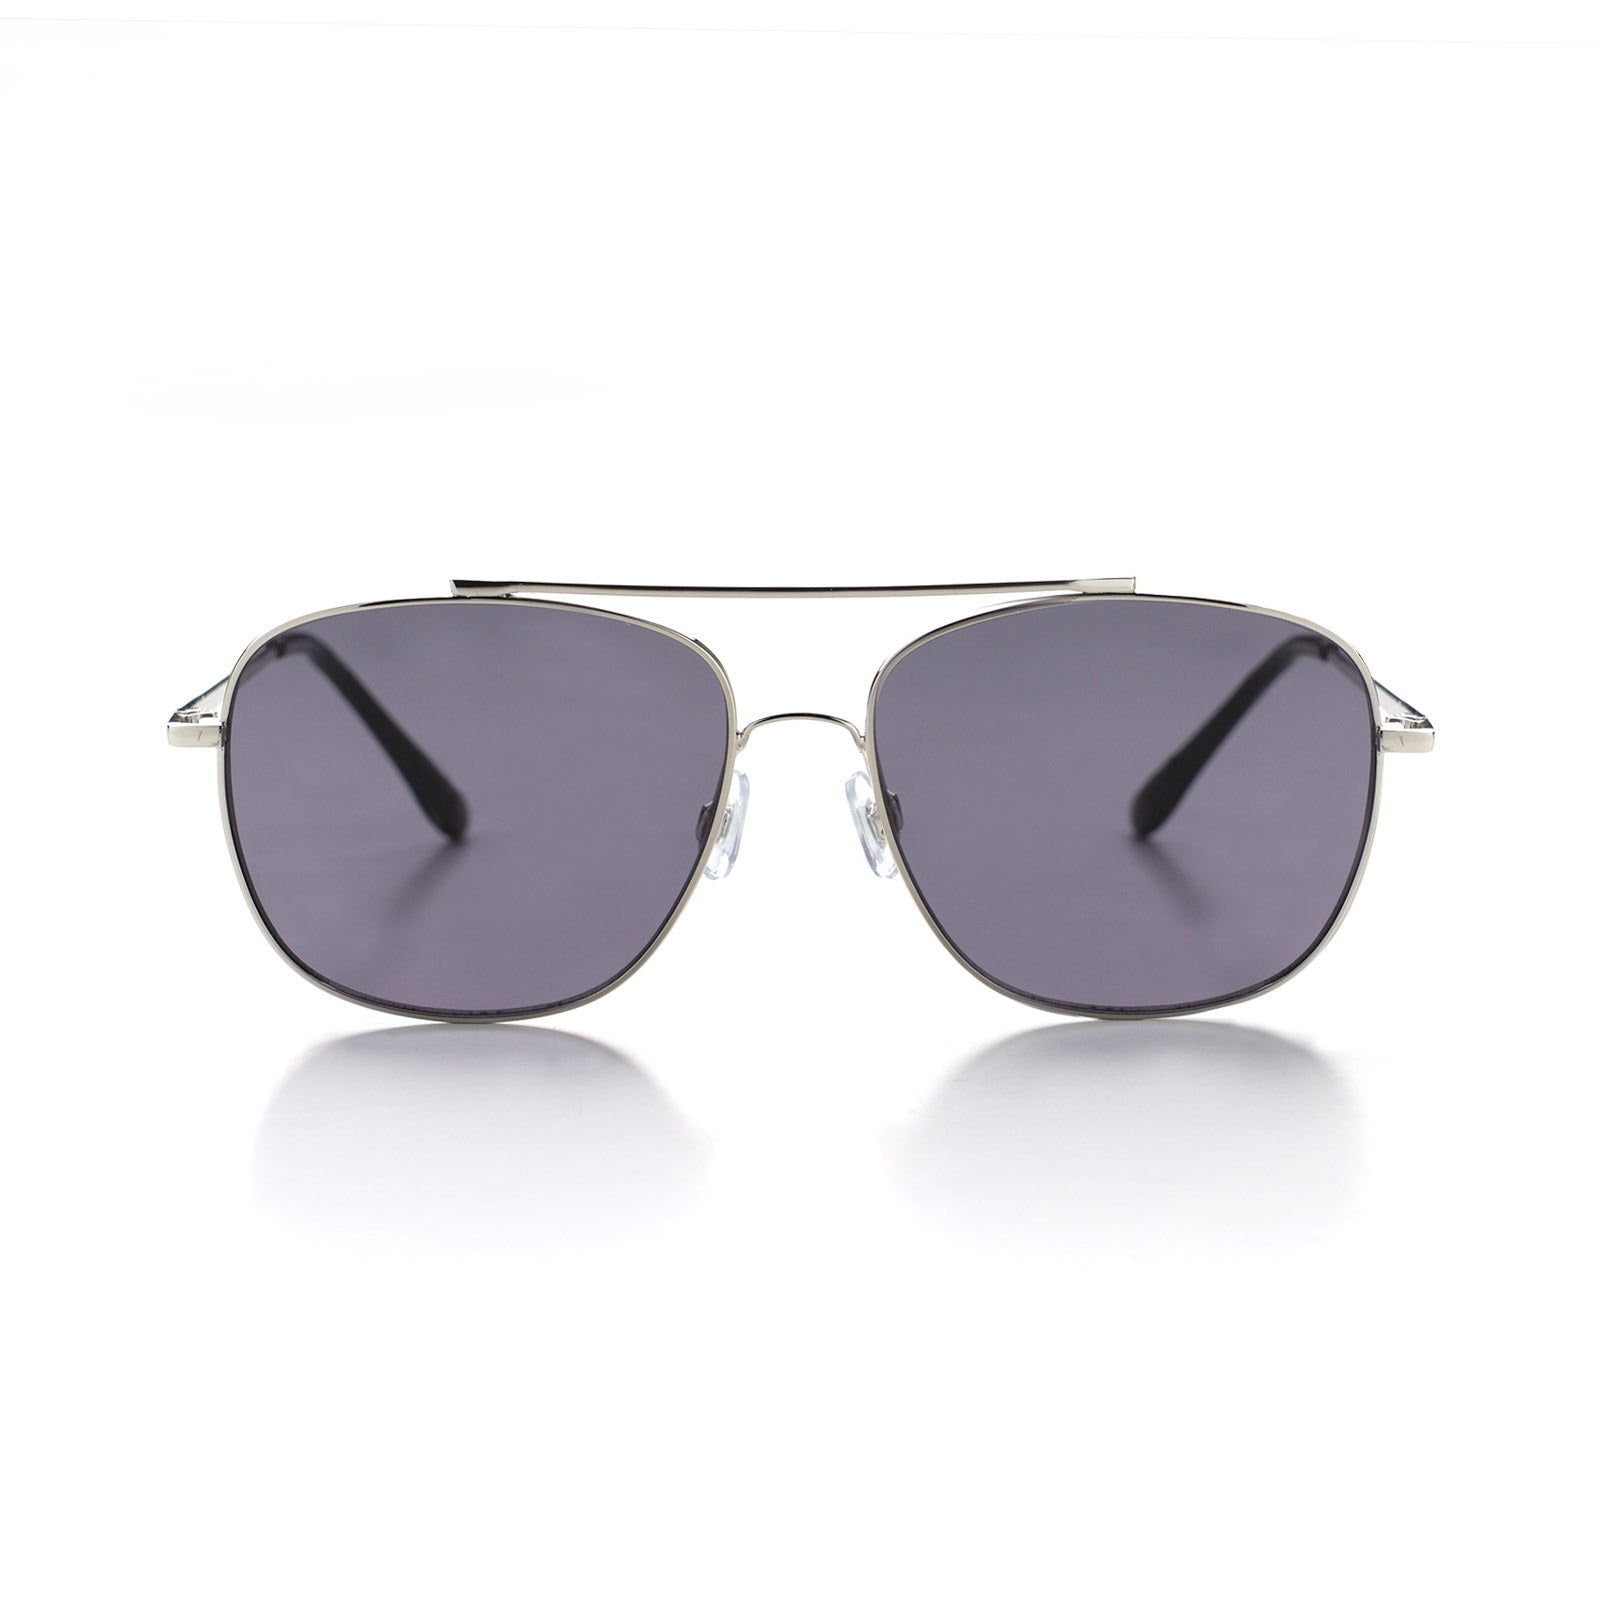 Optimum Optical Sunglasses-Legacy/New Altitude - Infinity Raine